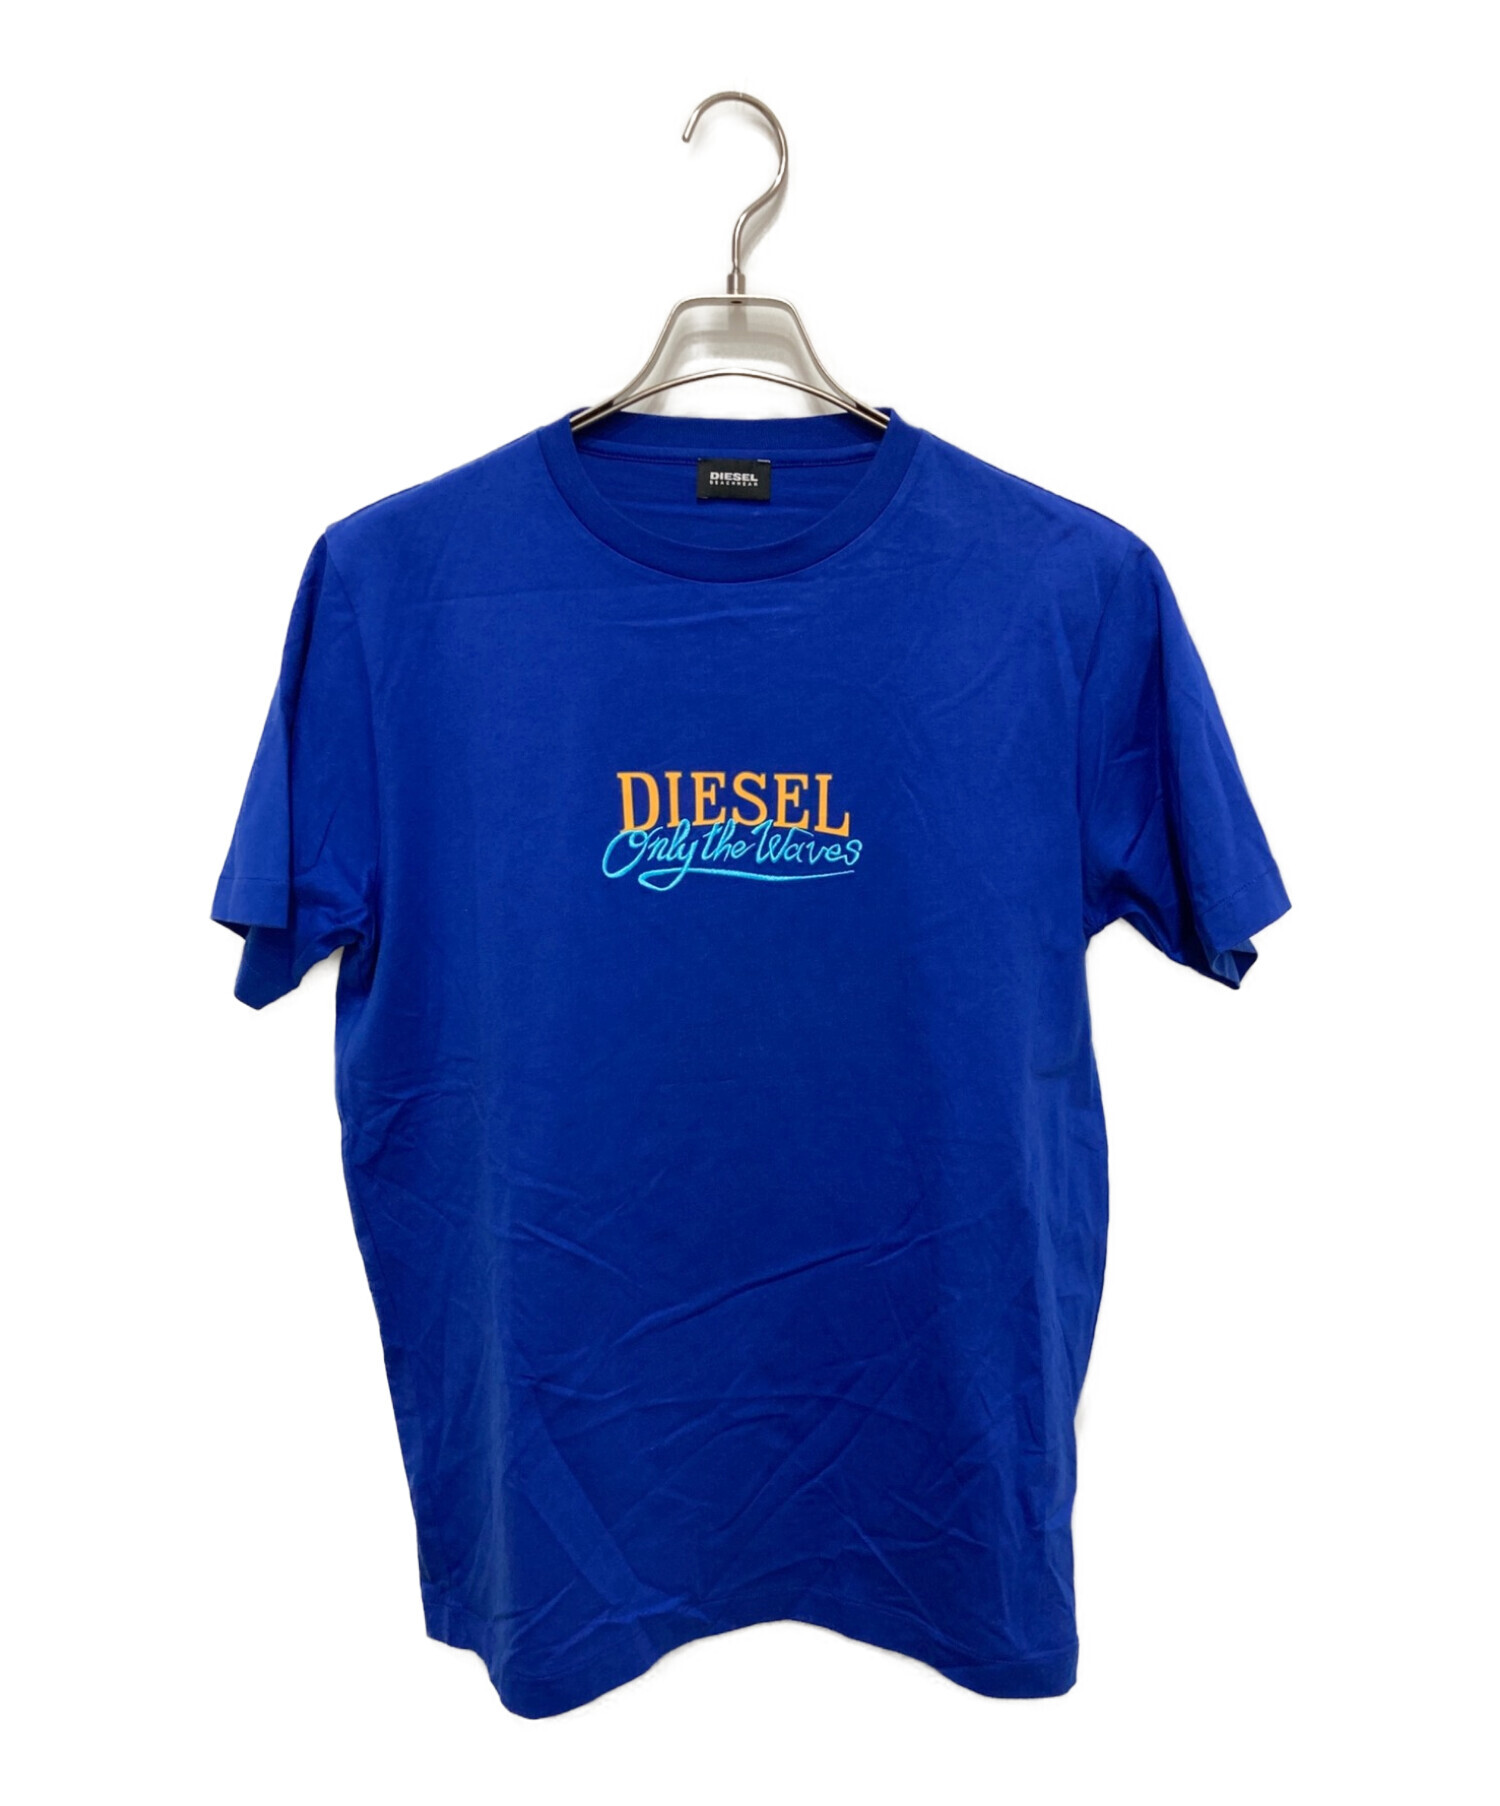 DIESEL (ディーゼル) プリントTシャツ ブルー サイズ:S